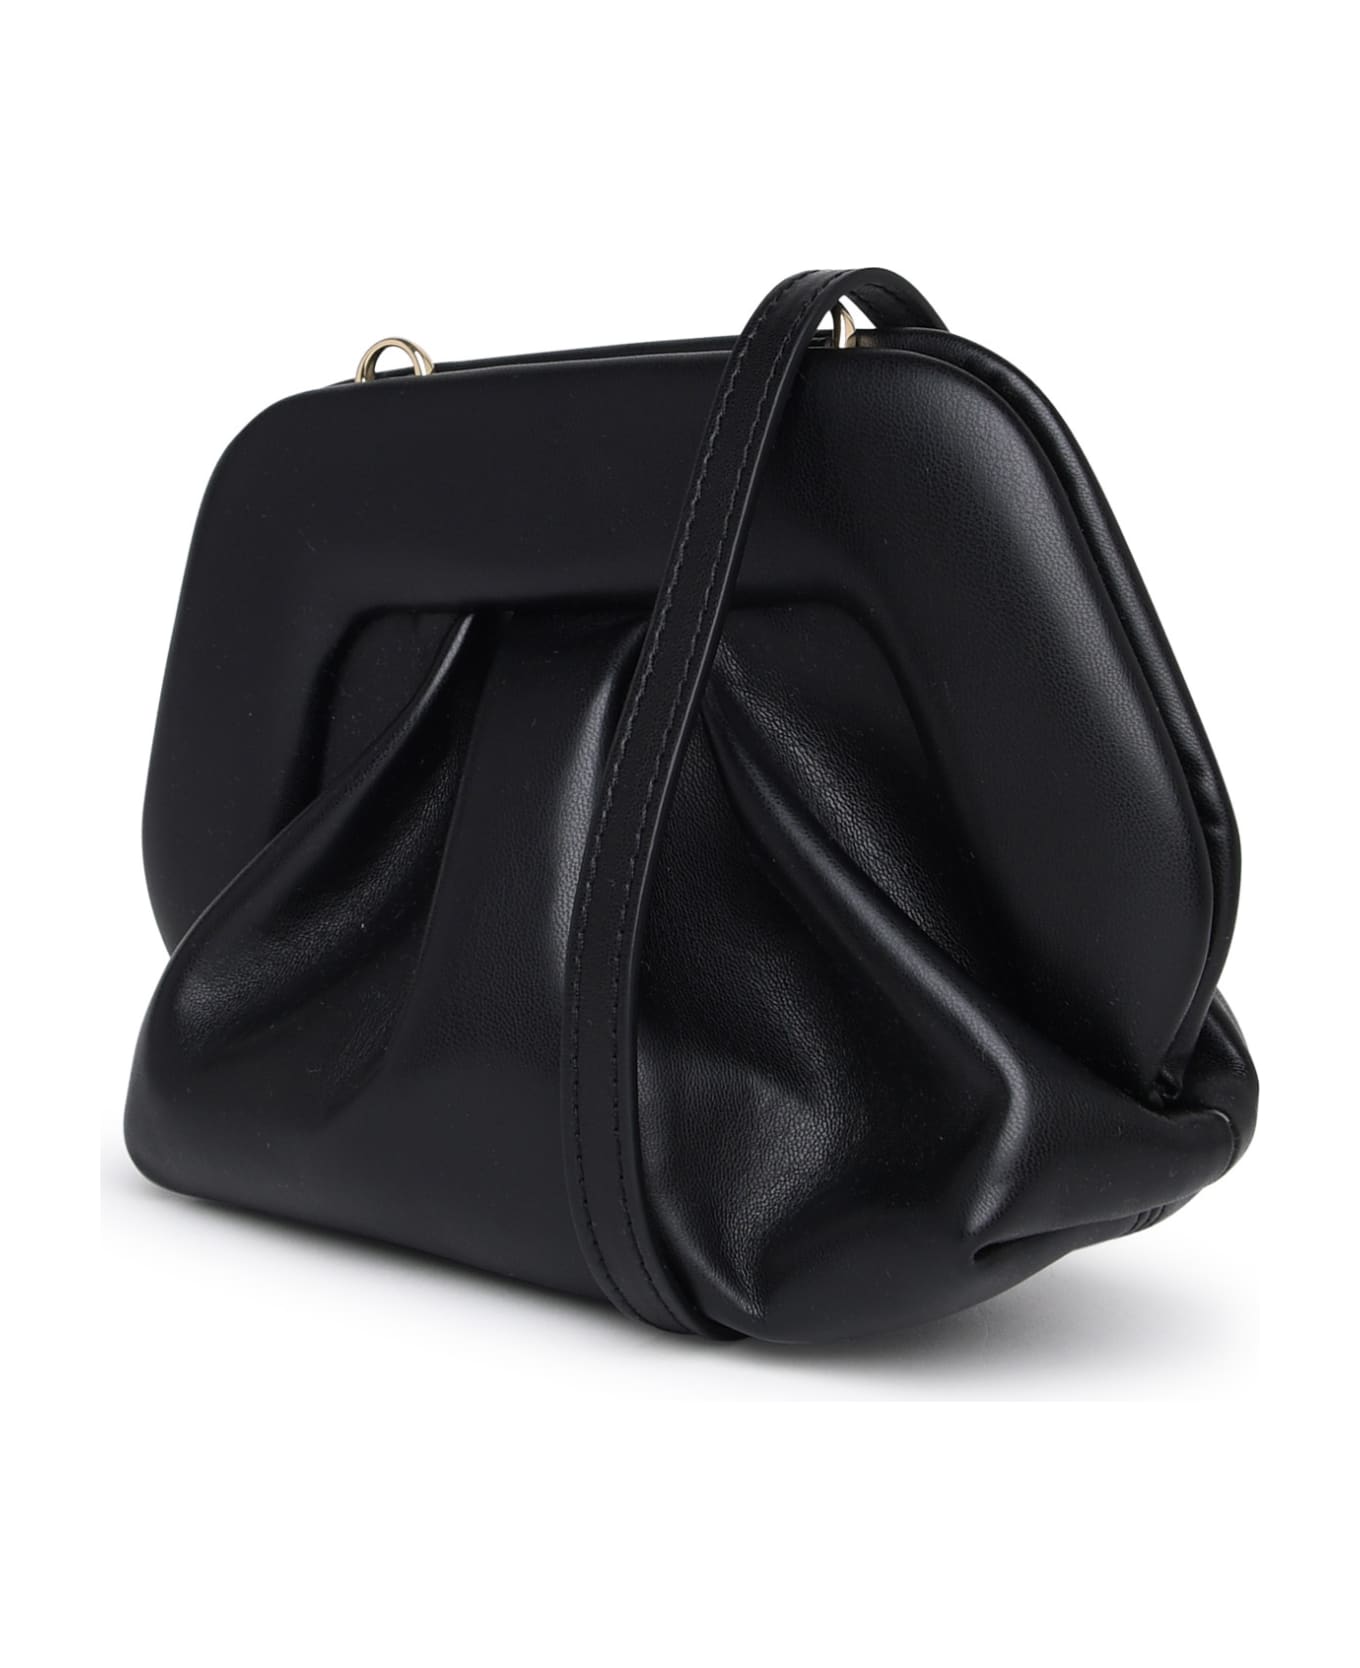 THEMOIRè Gea Bag In Black Vegan Leather - Black